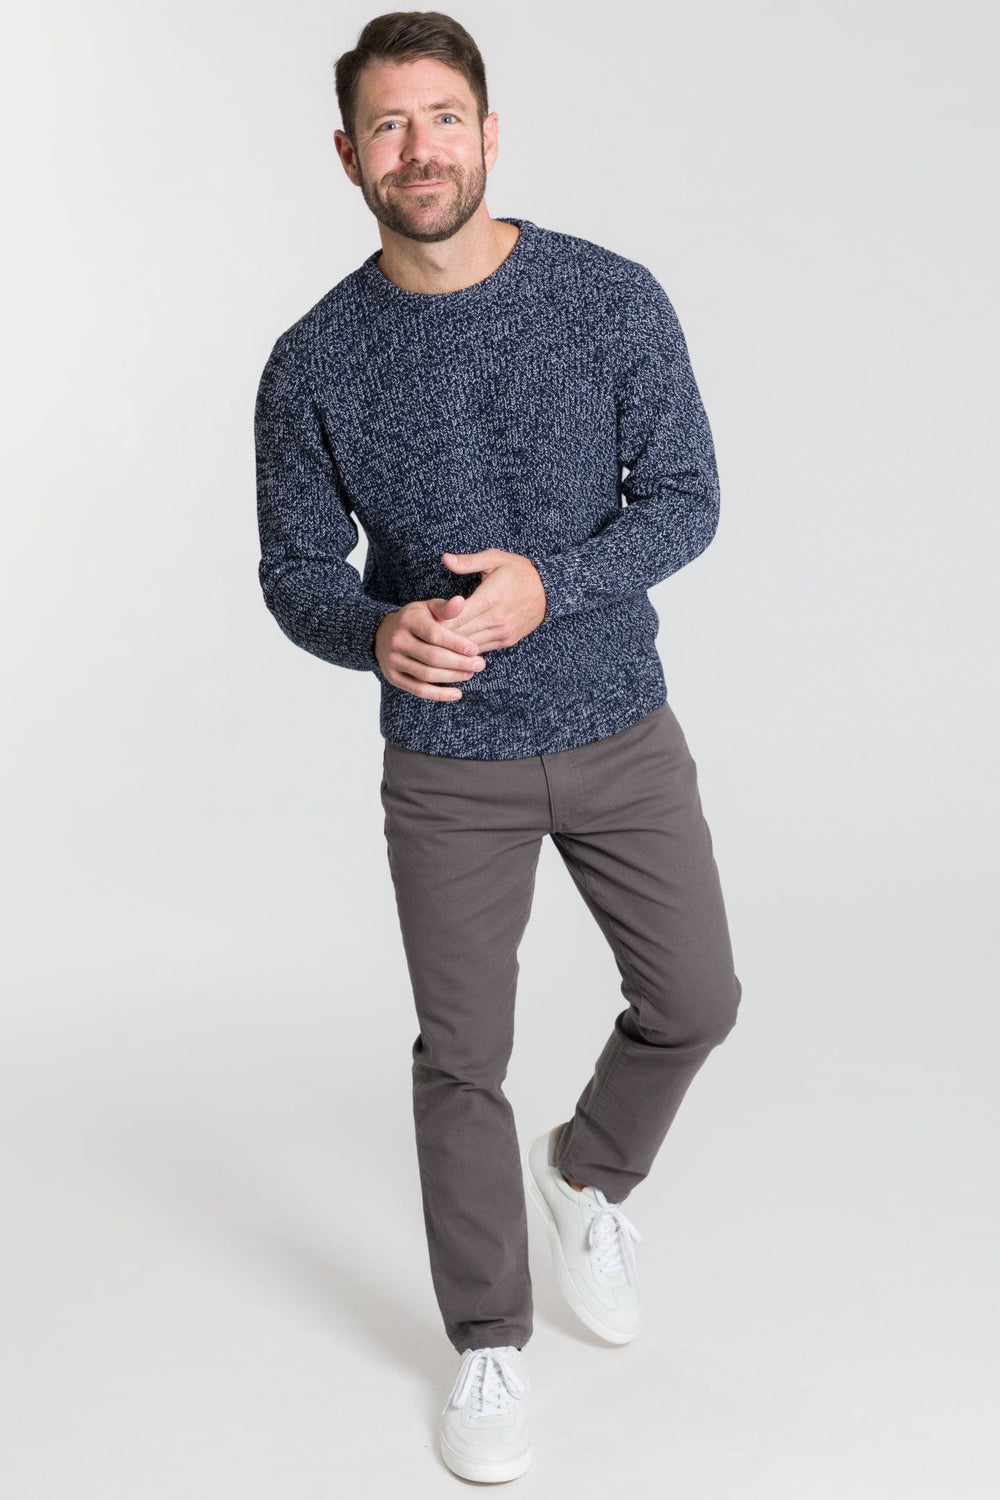 Buy Deep Navy Knit Sweater for Short Men | Ash & Erie   Sweater